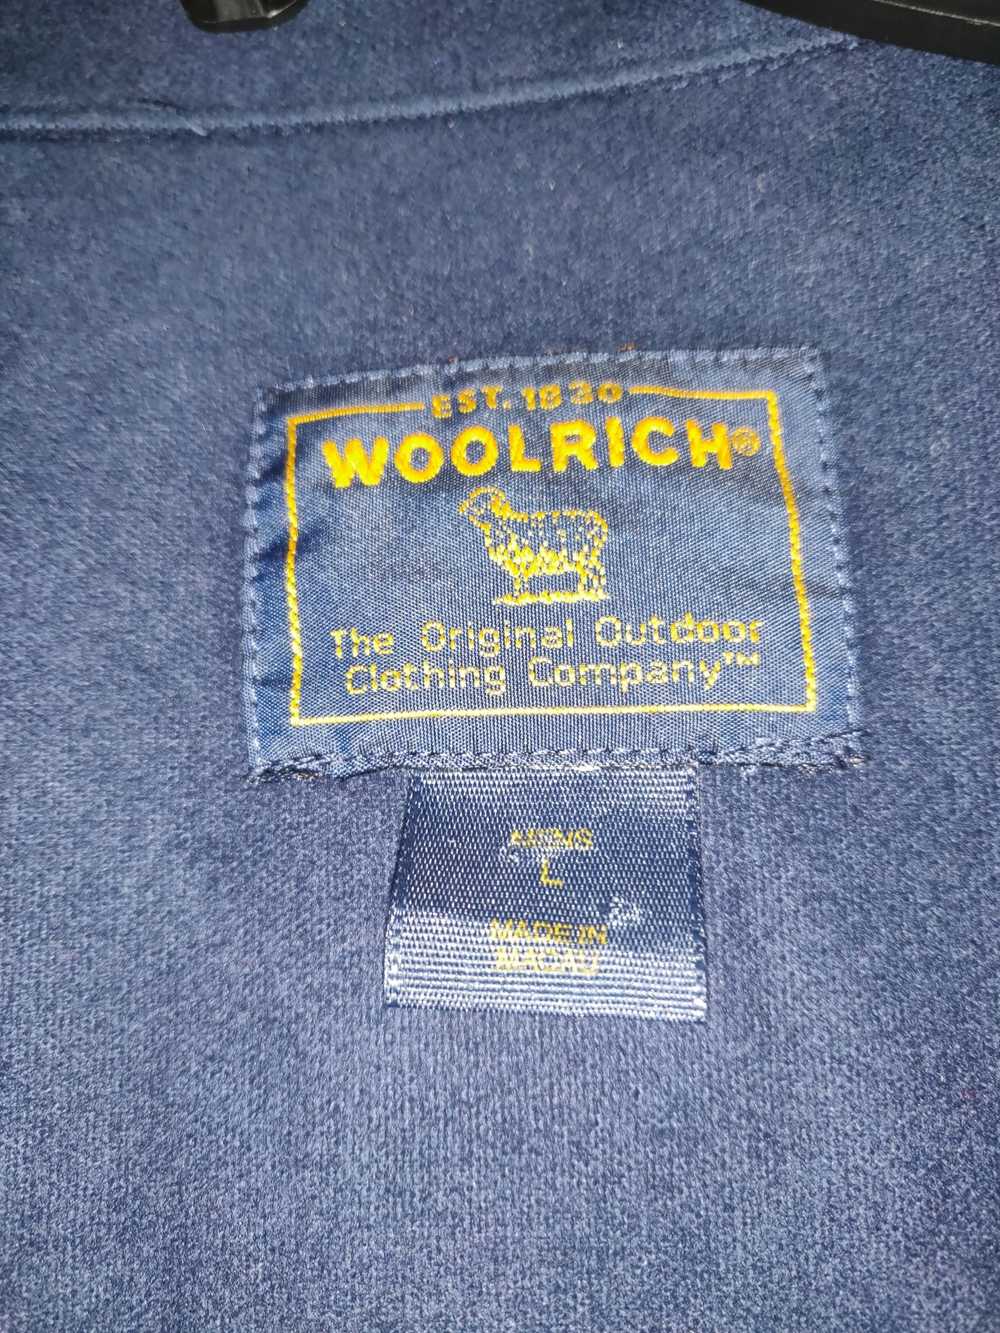 Vintage × Woolrich Woolen Mills VINTAGE Woolrich … - image 4